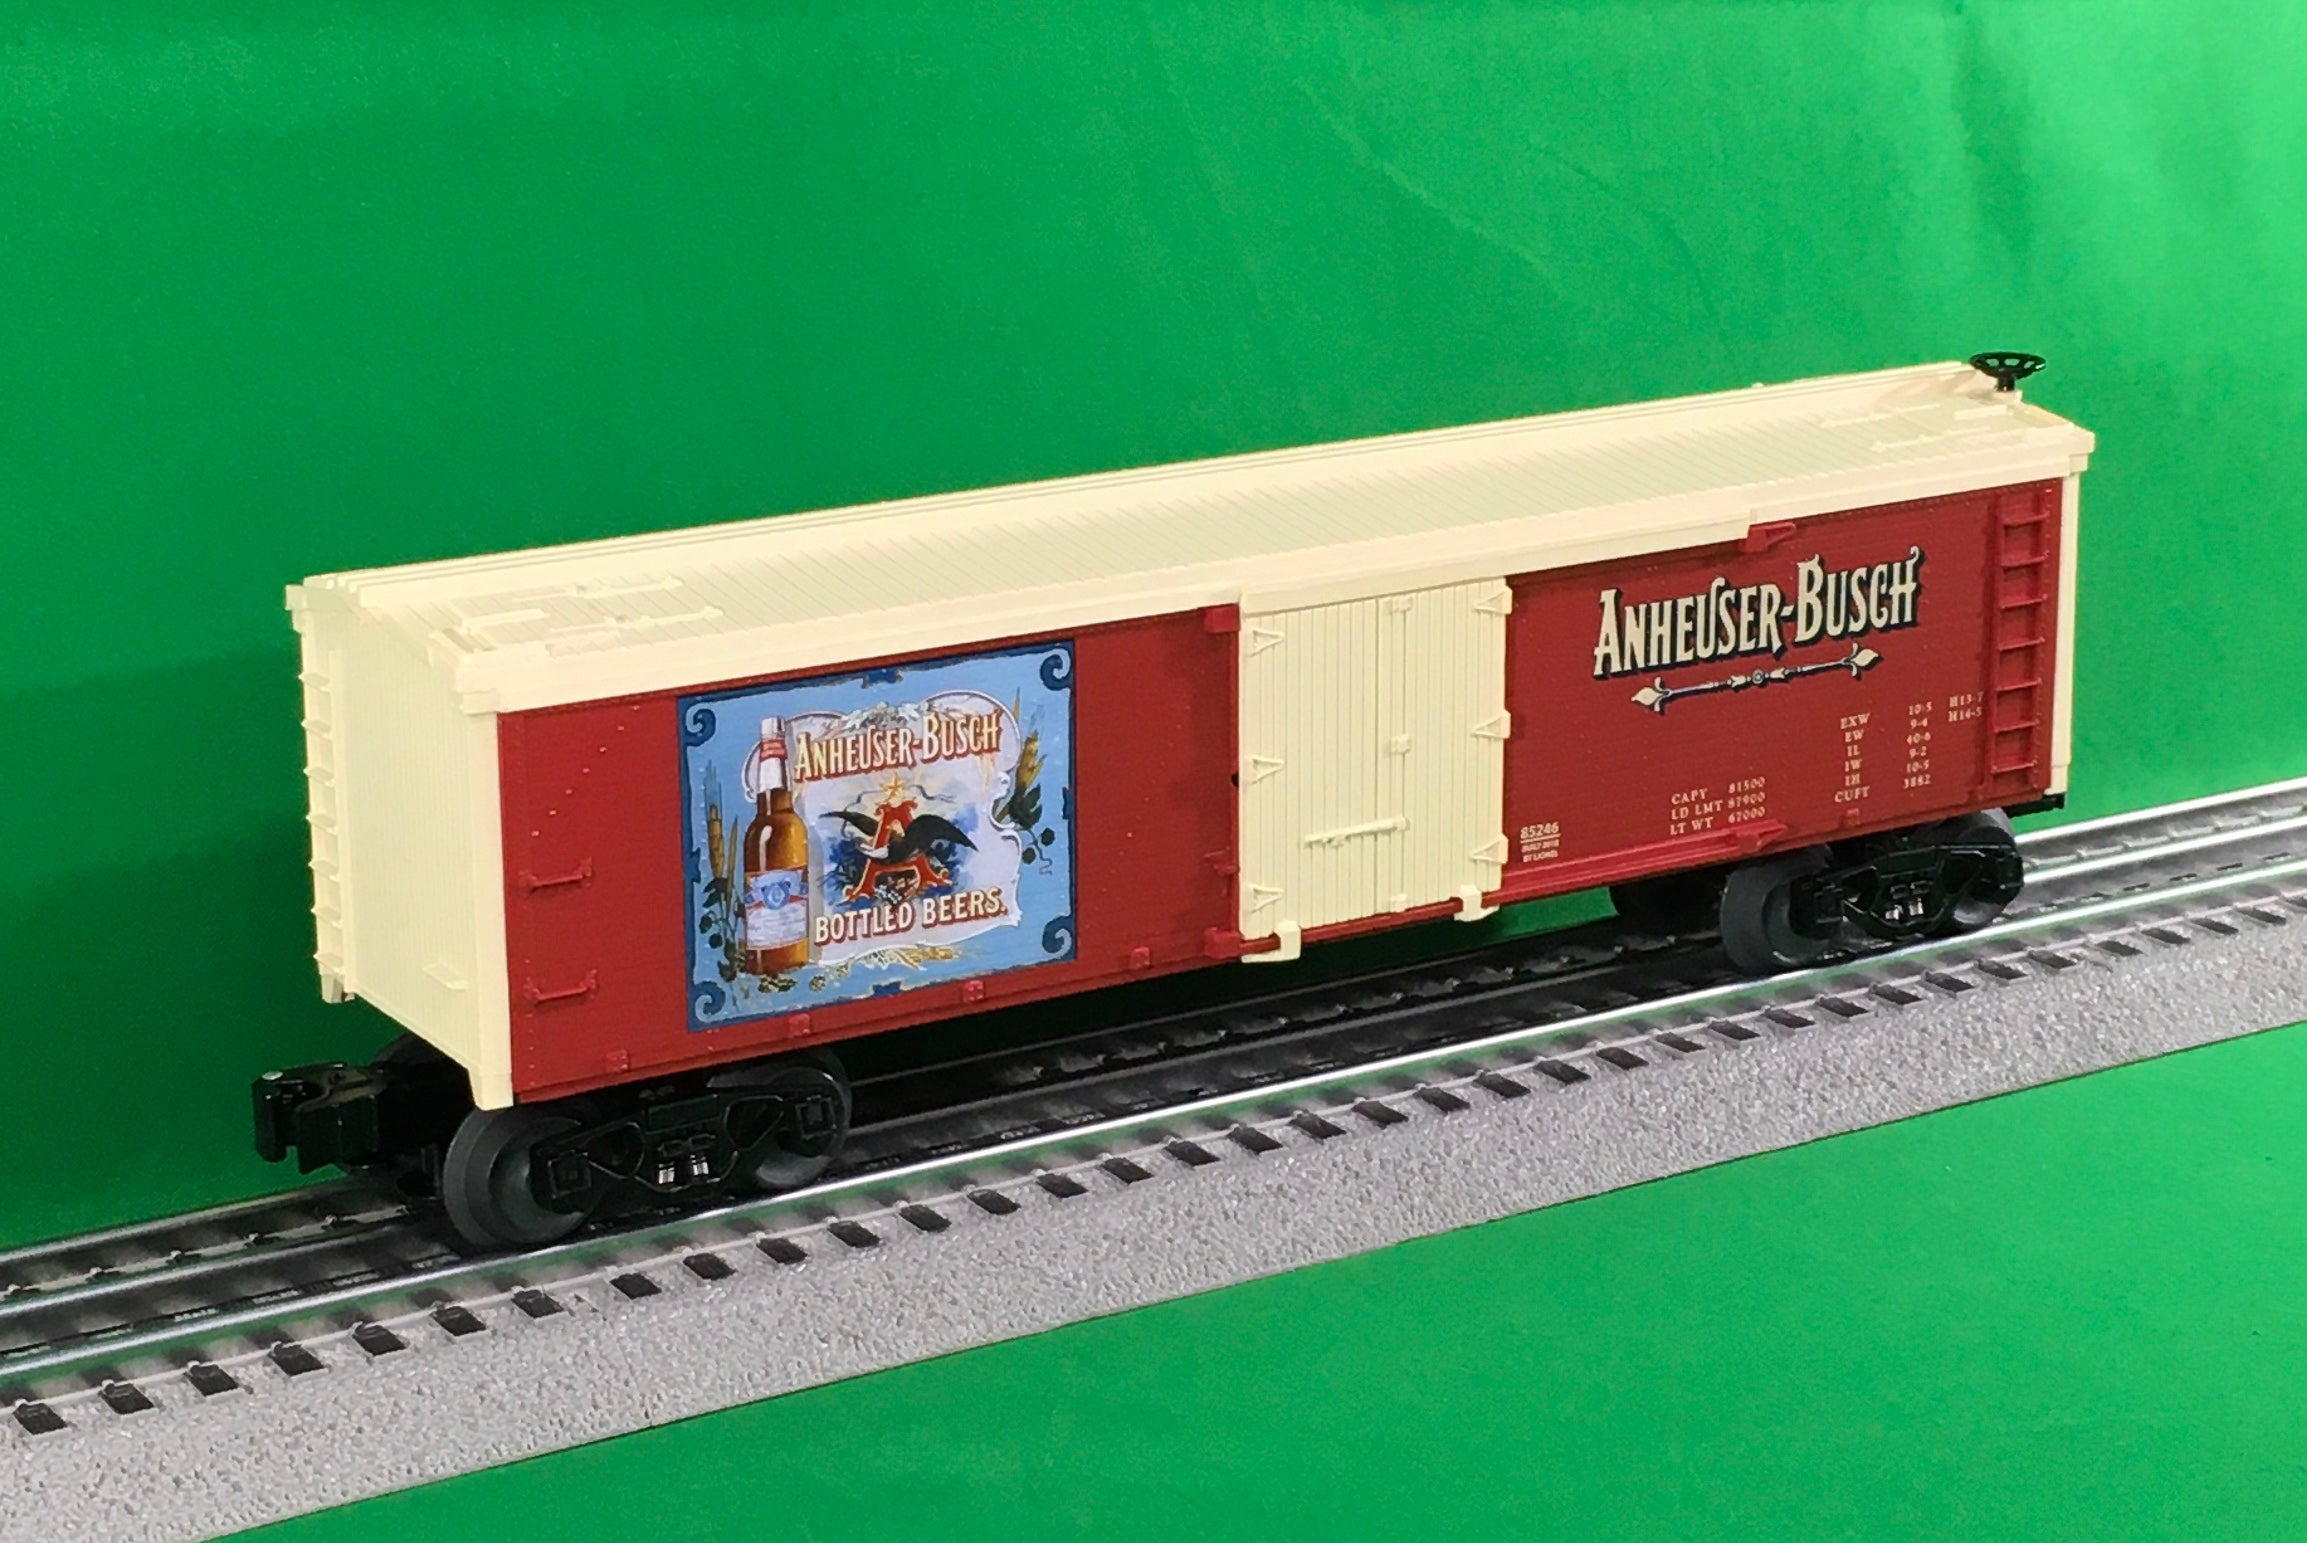 Lionel 6-85246 - Anheuser-Busch - Vintage Reefer Car "Anheuser Busch"